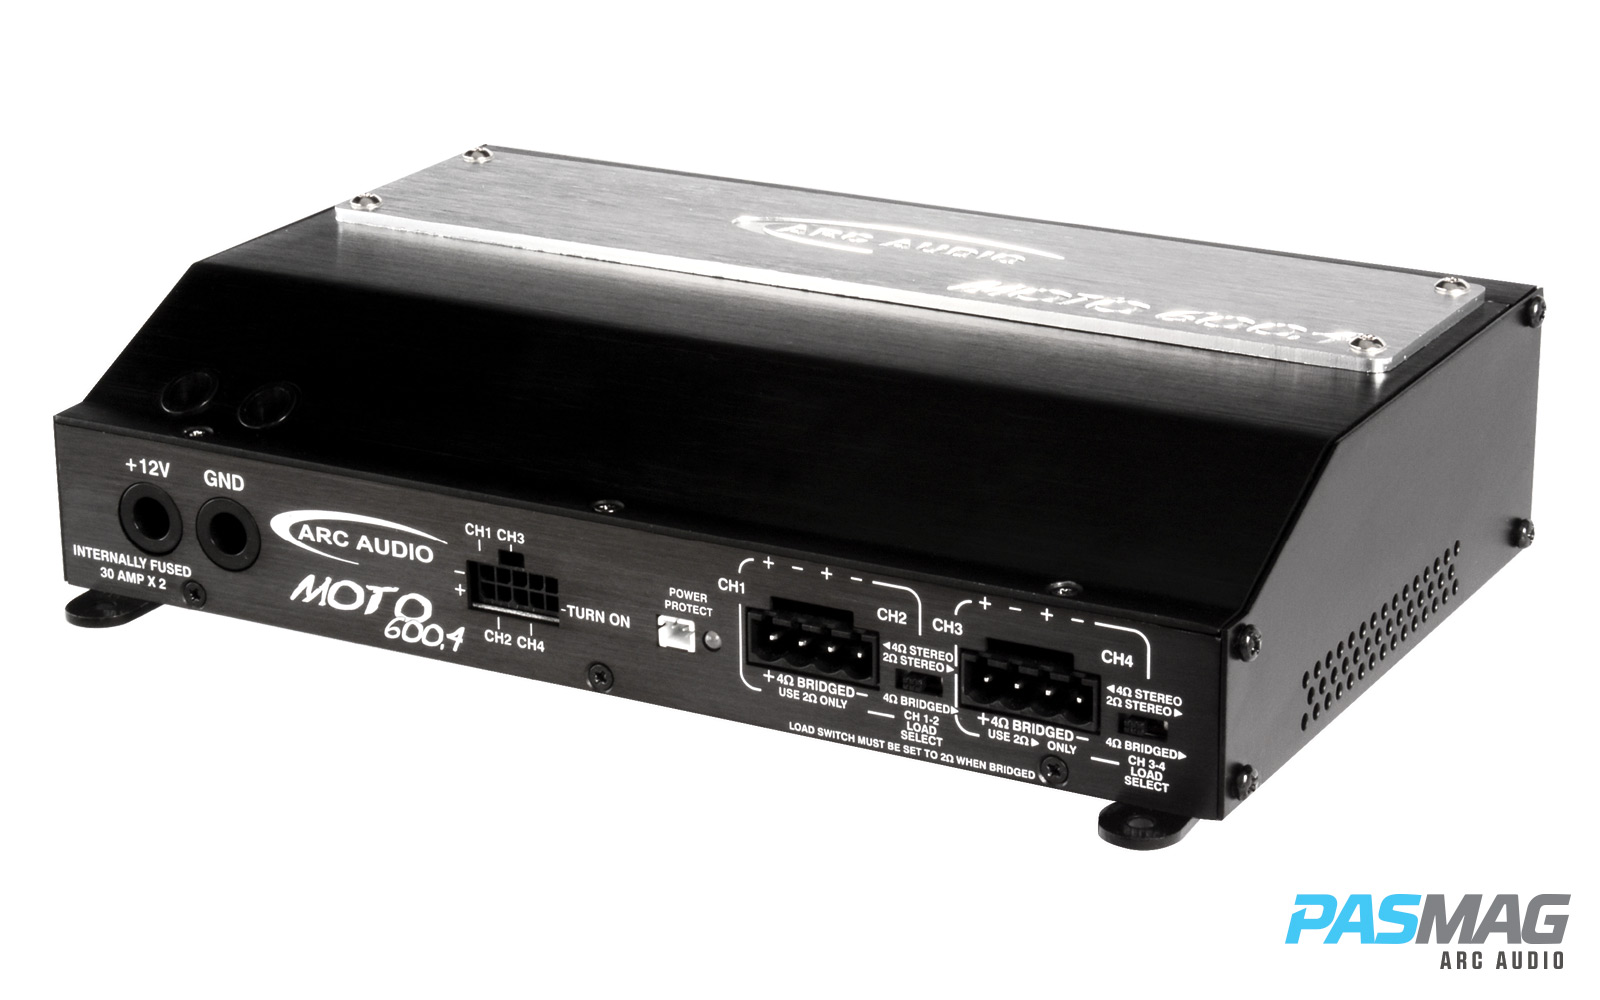 ARC Audio Moto6004 Connection Panel Angled PASMAG